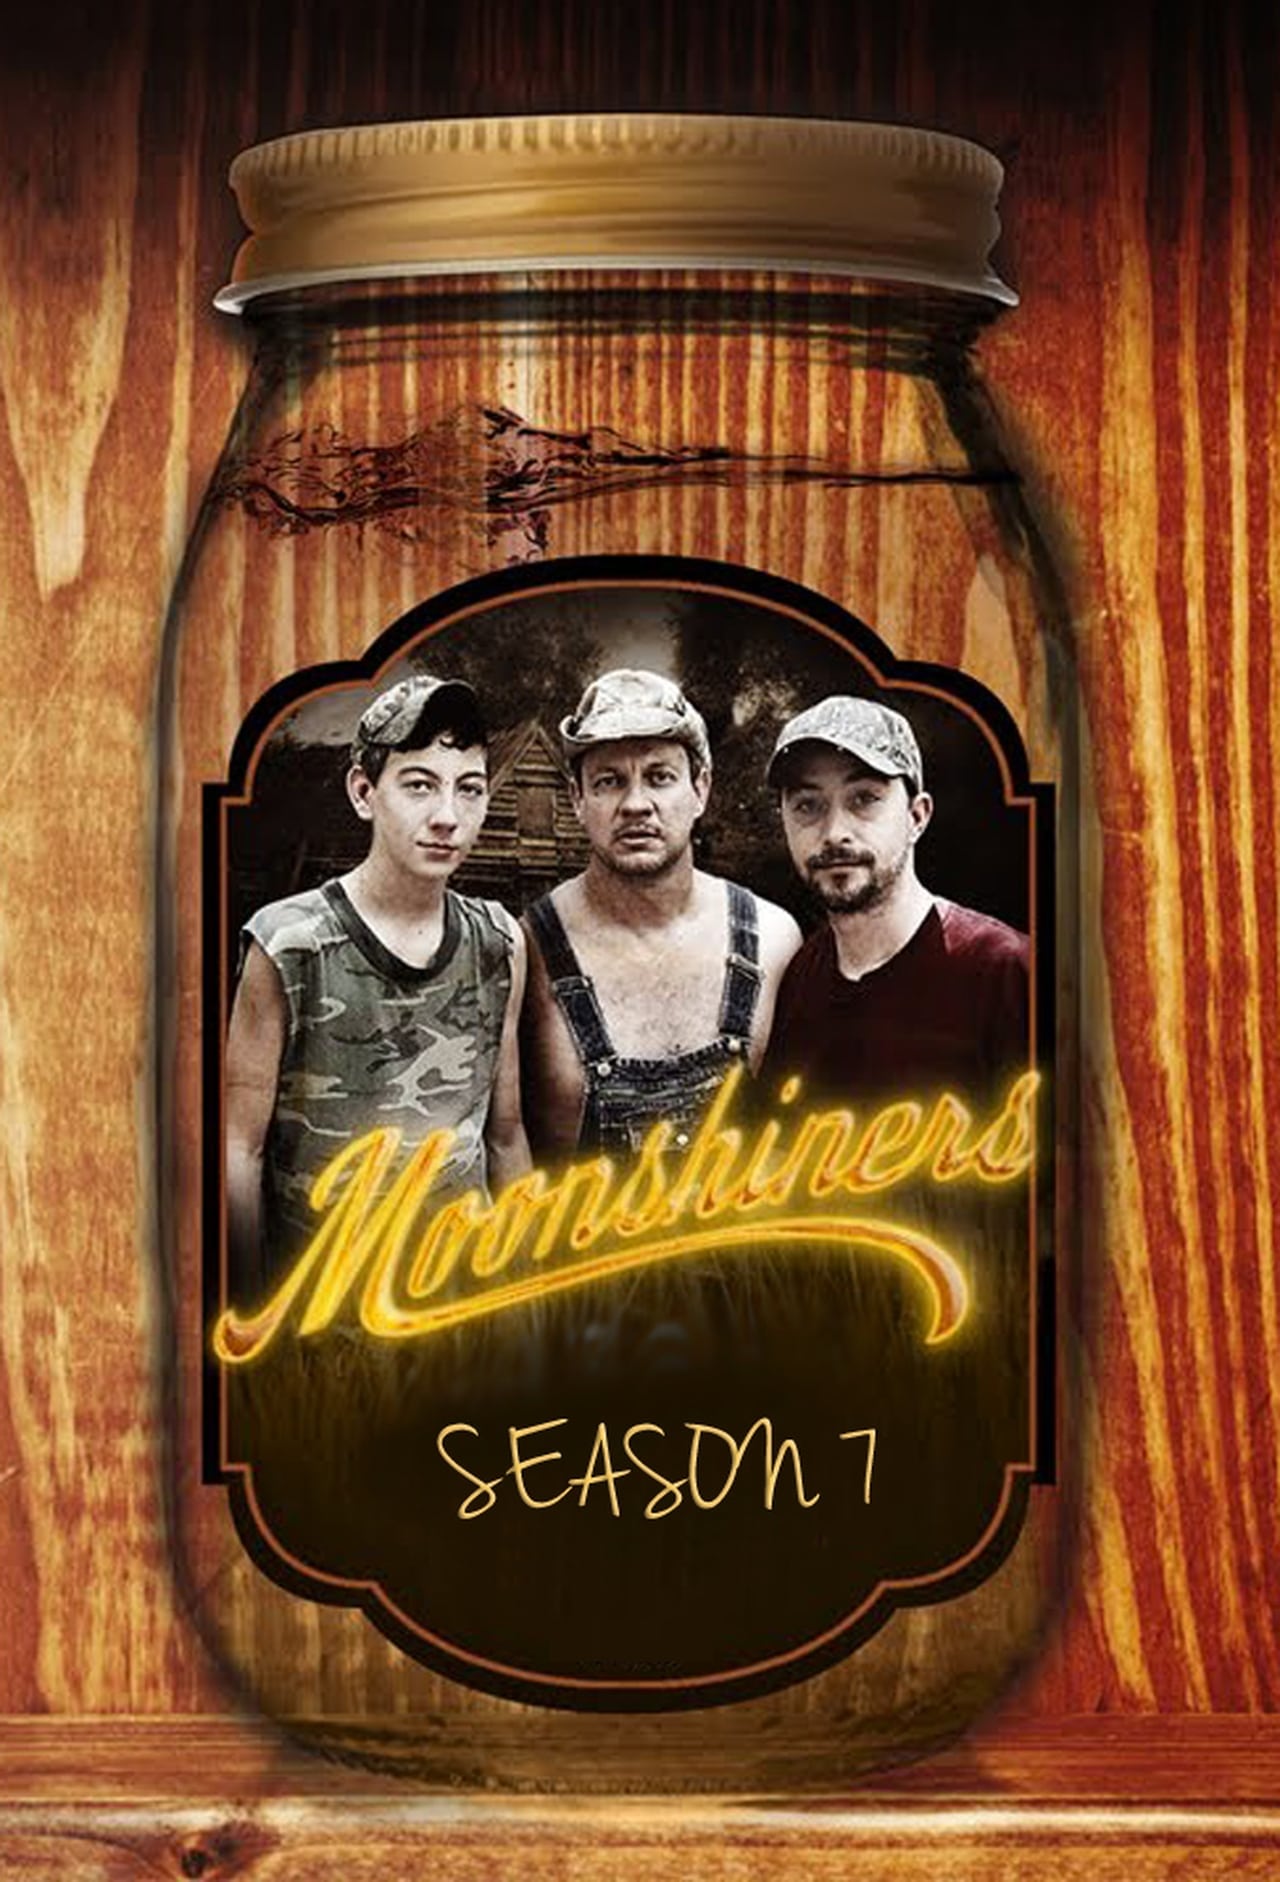 Moonshiners Season 7